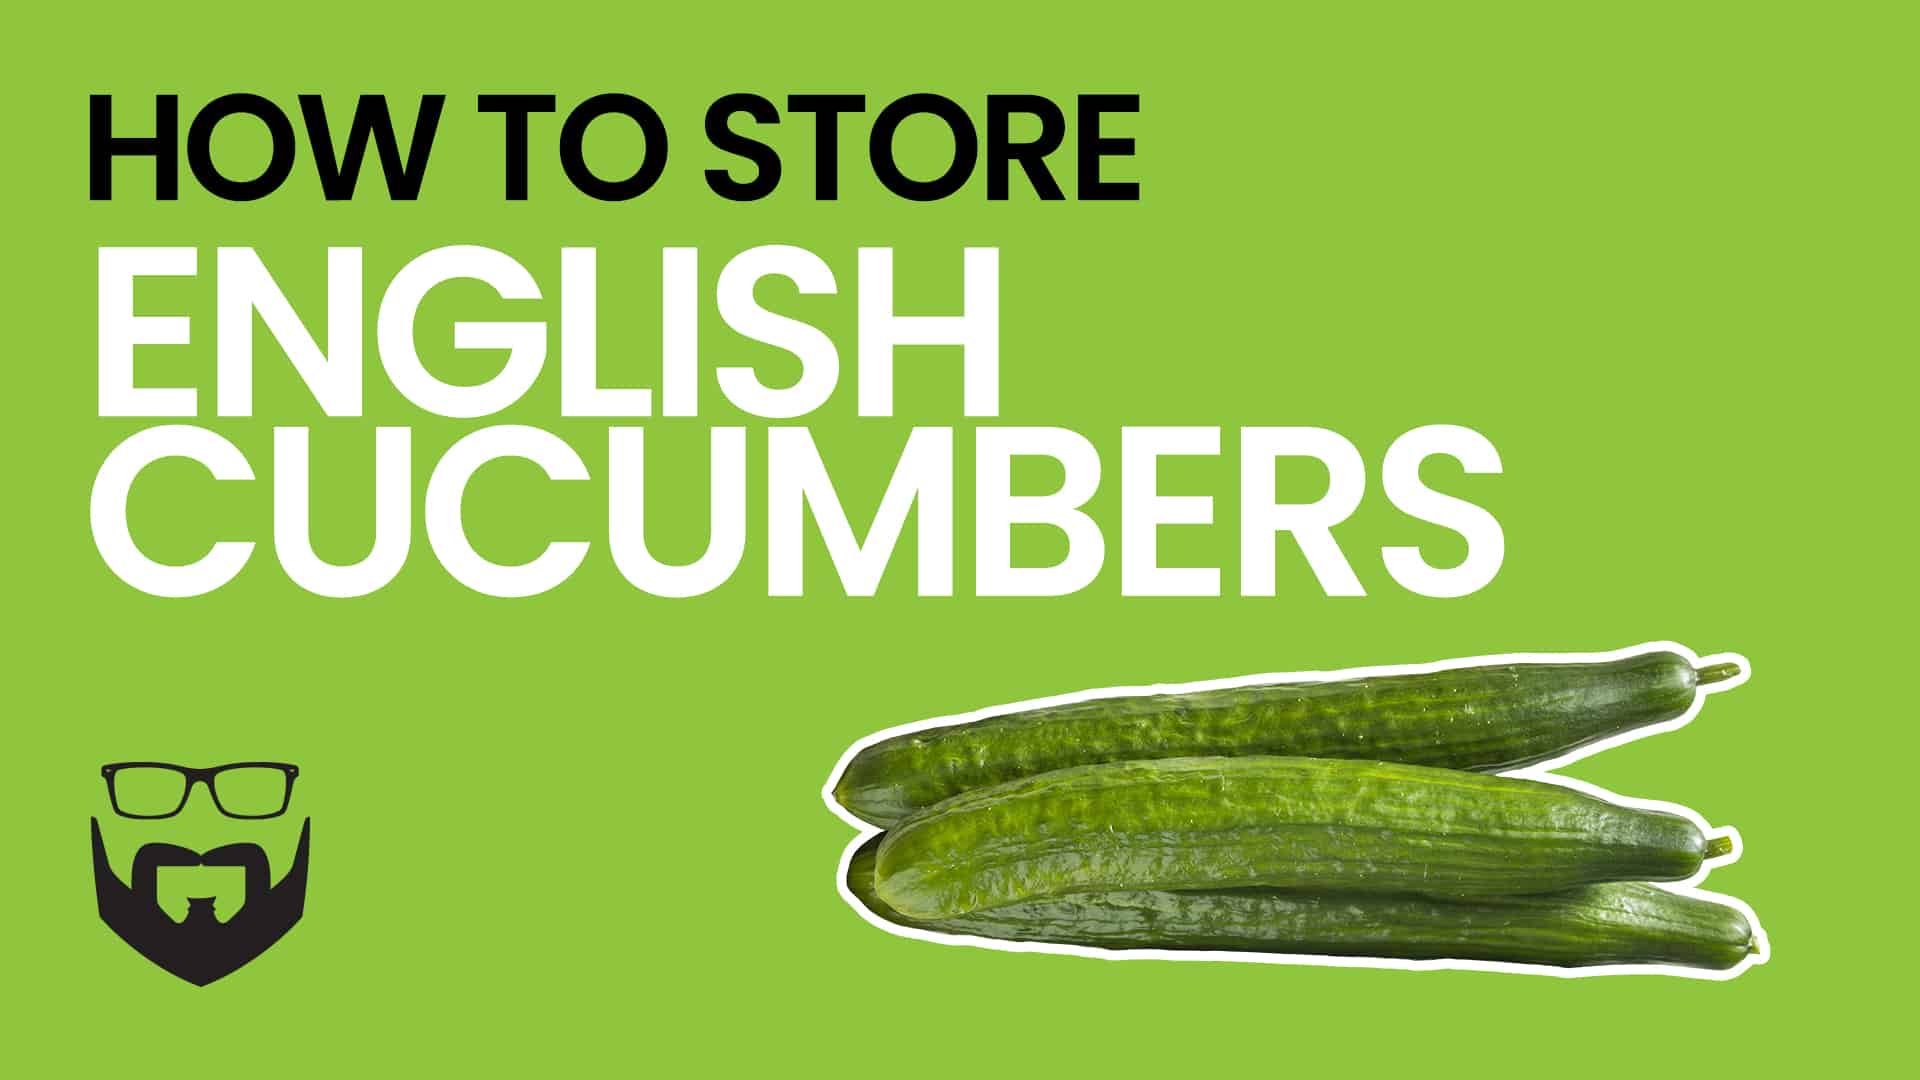 https://jerryjamesstone.com/wp-content/uploads/2019/09/How-to-Store-English-Cucumbers-Video-Green.jpg